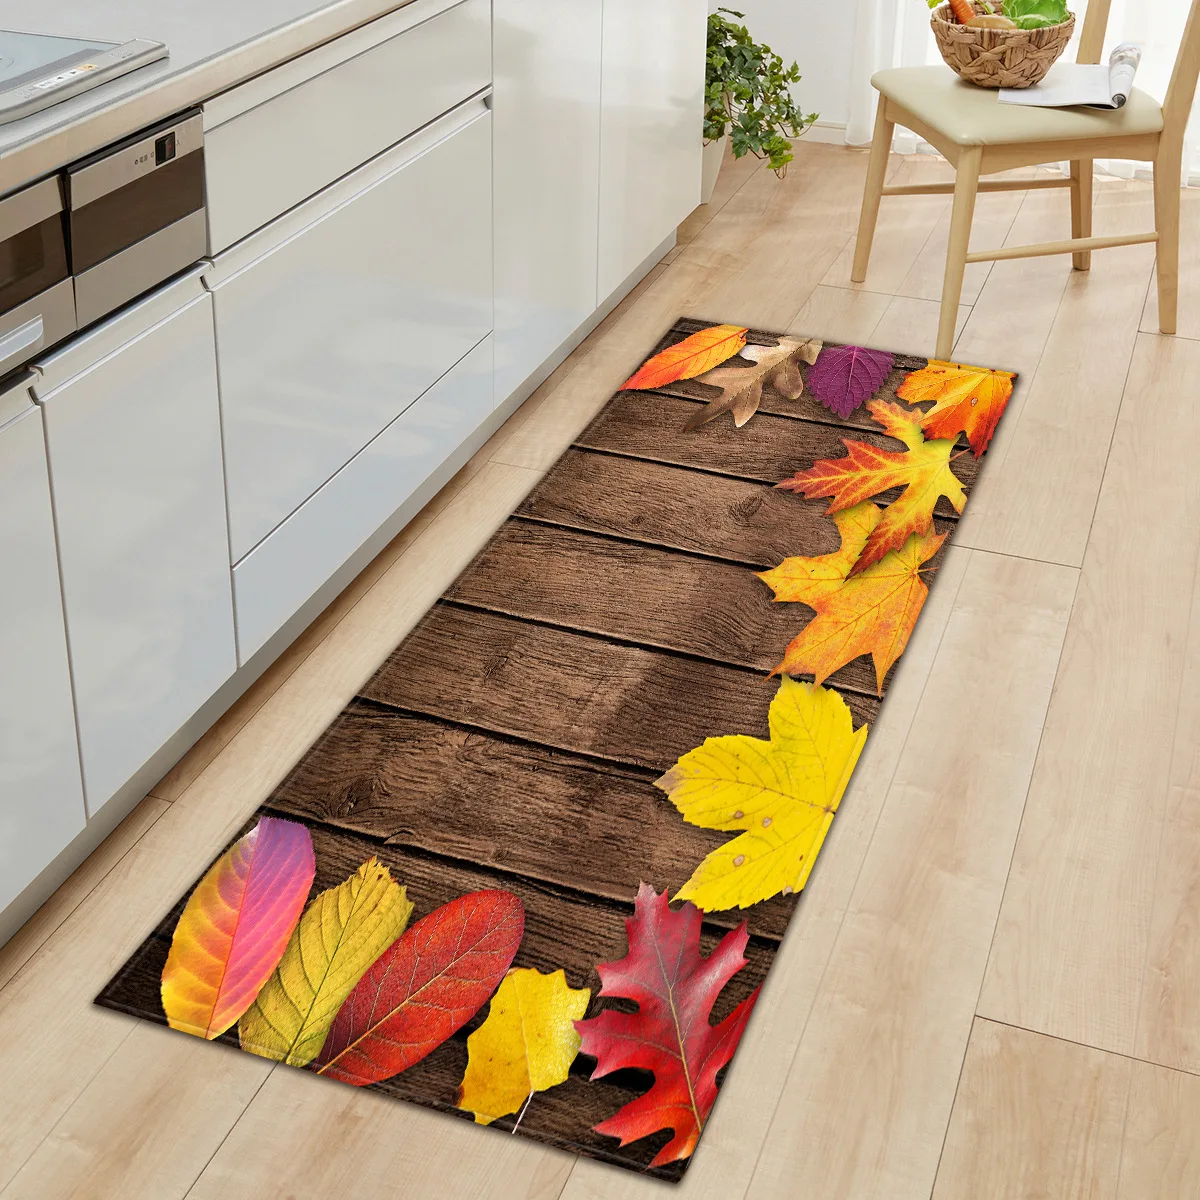 12 Styles Anti-slip Modern Kitchen Rugs Wood Grain Pattern Floor Carpet for Living Room Washable Doormat Bedroom Mat Home Decor